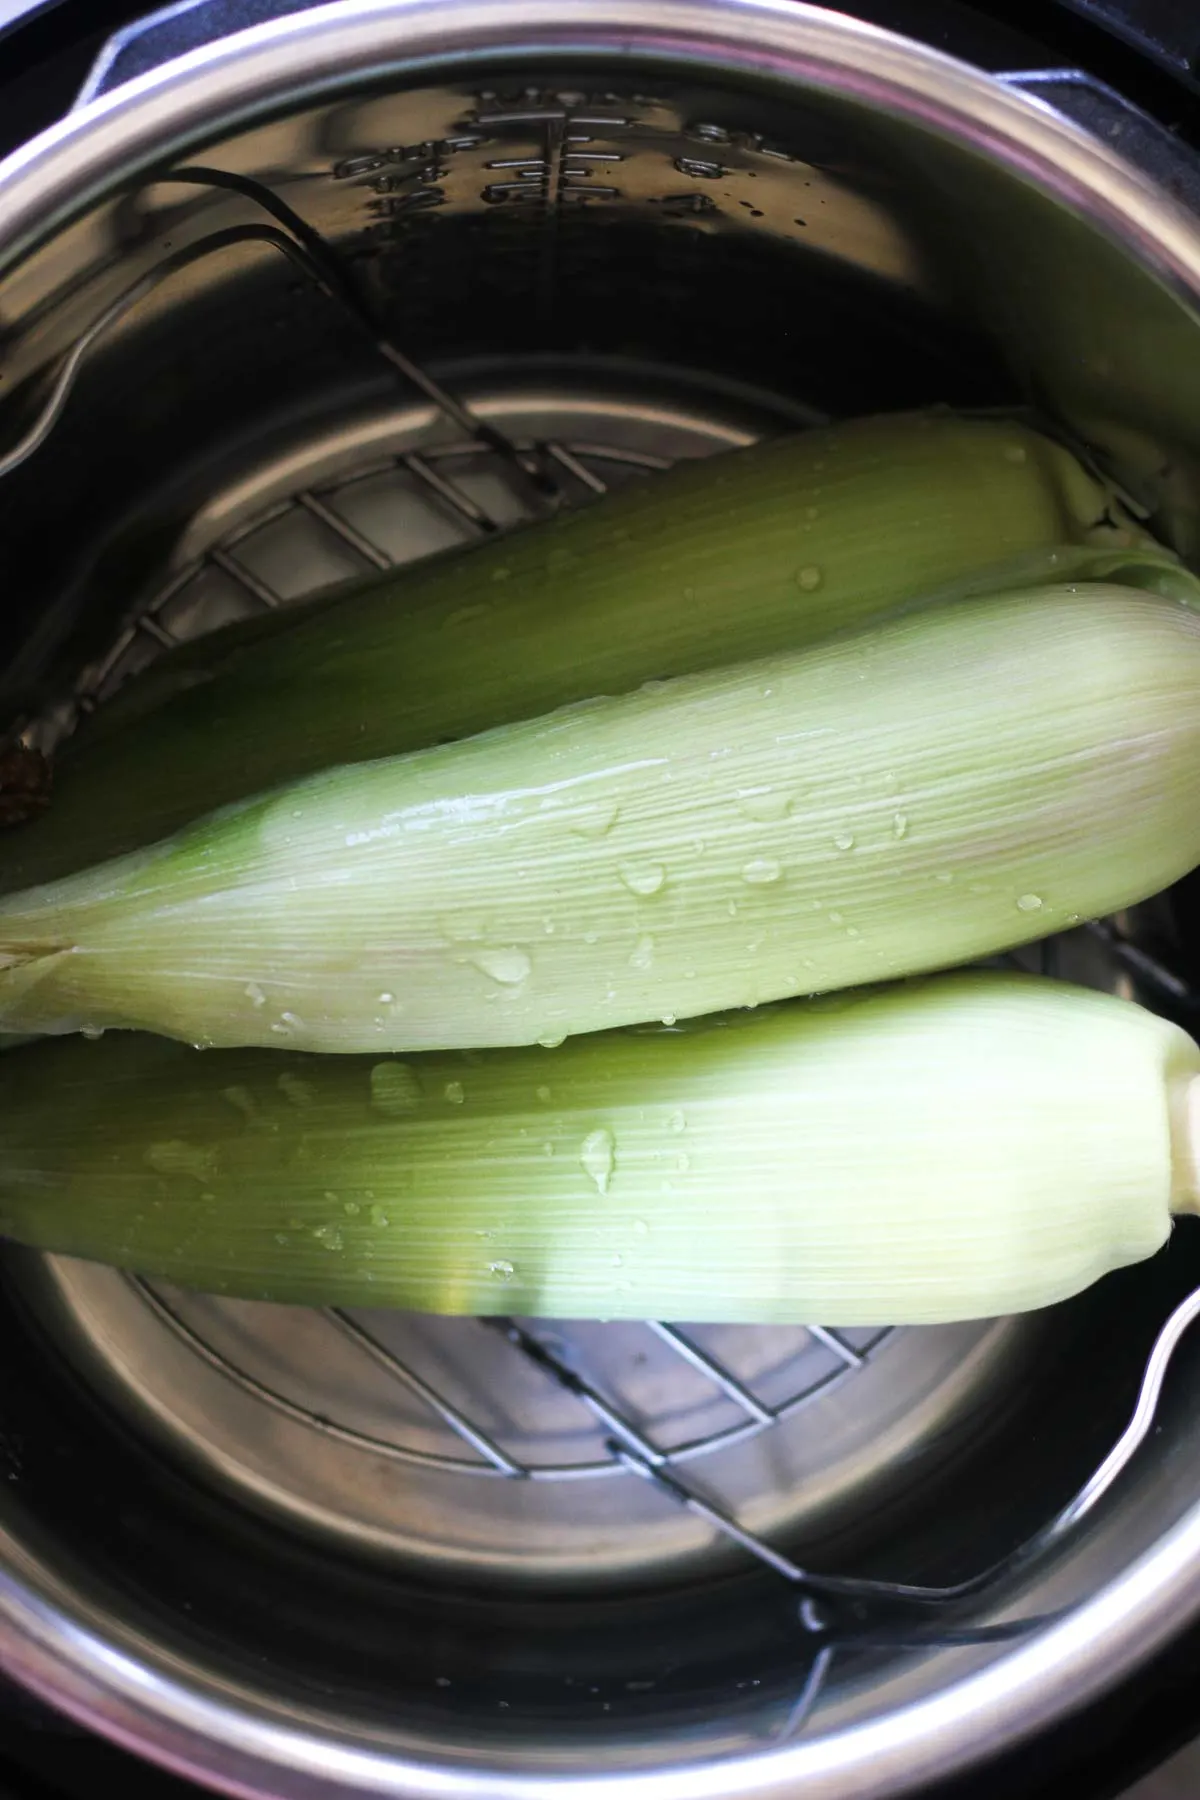 corn on the cob in husk in the instant pot inner pot with trivet